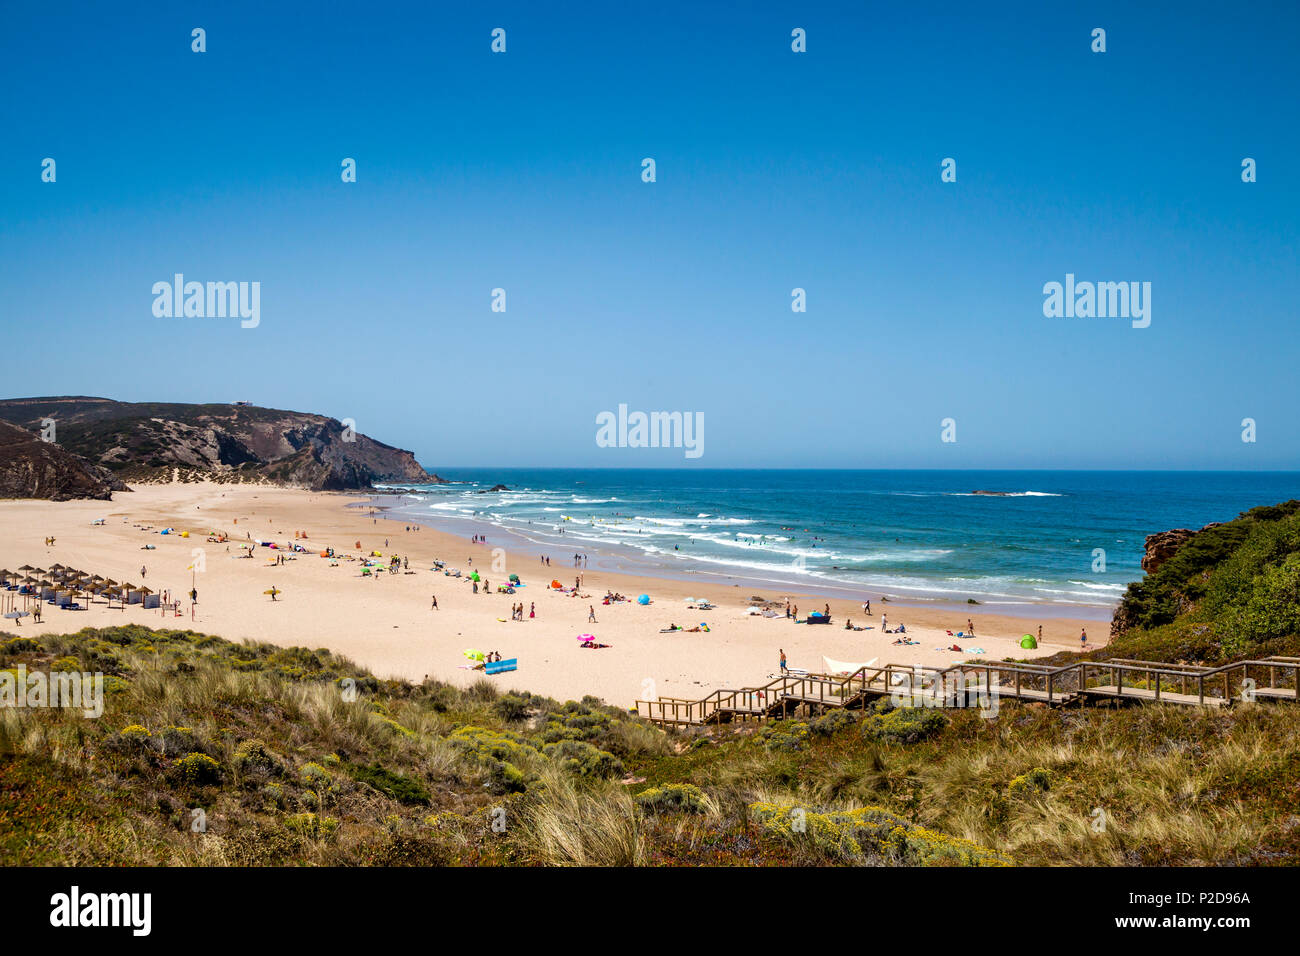 Strand, Praia de Amado, Costa Vicentina, Algarve, Portugal Stockfoto